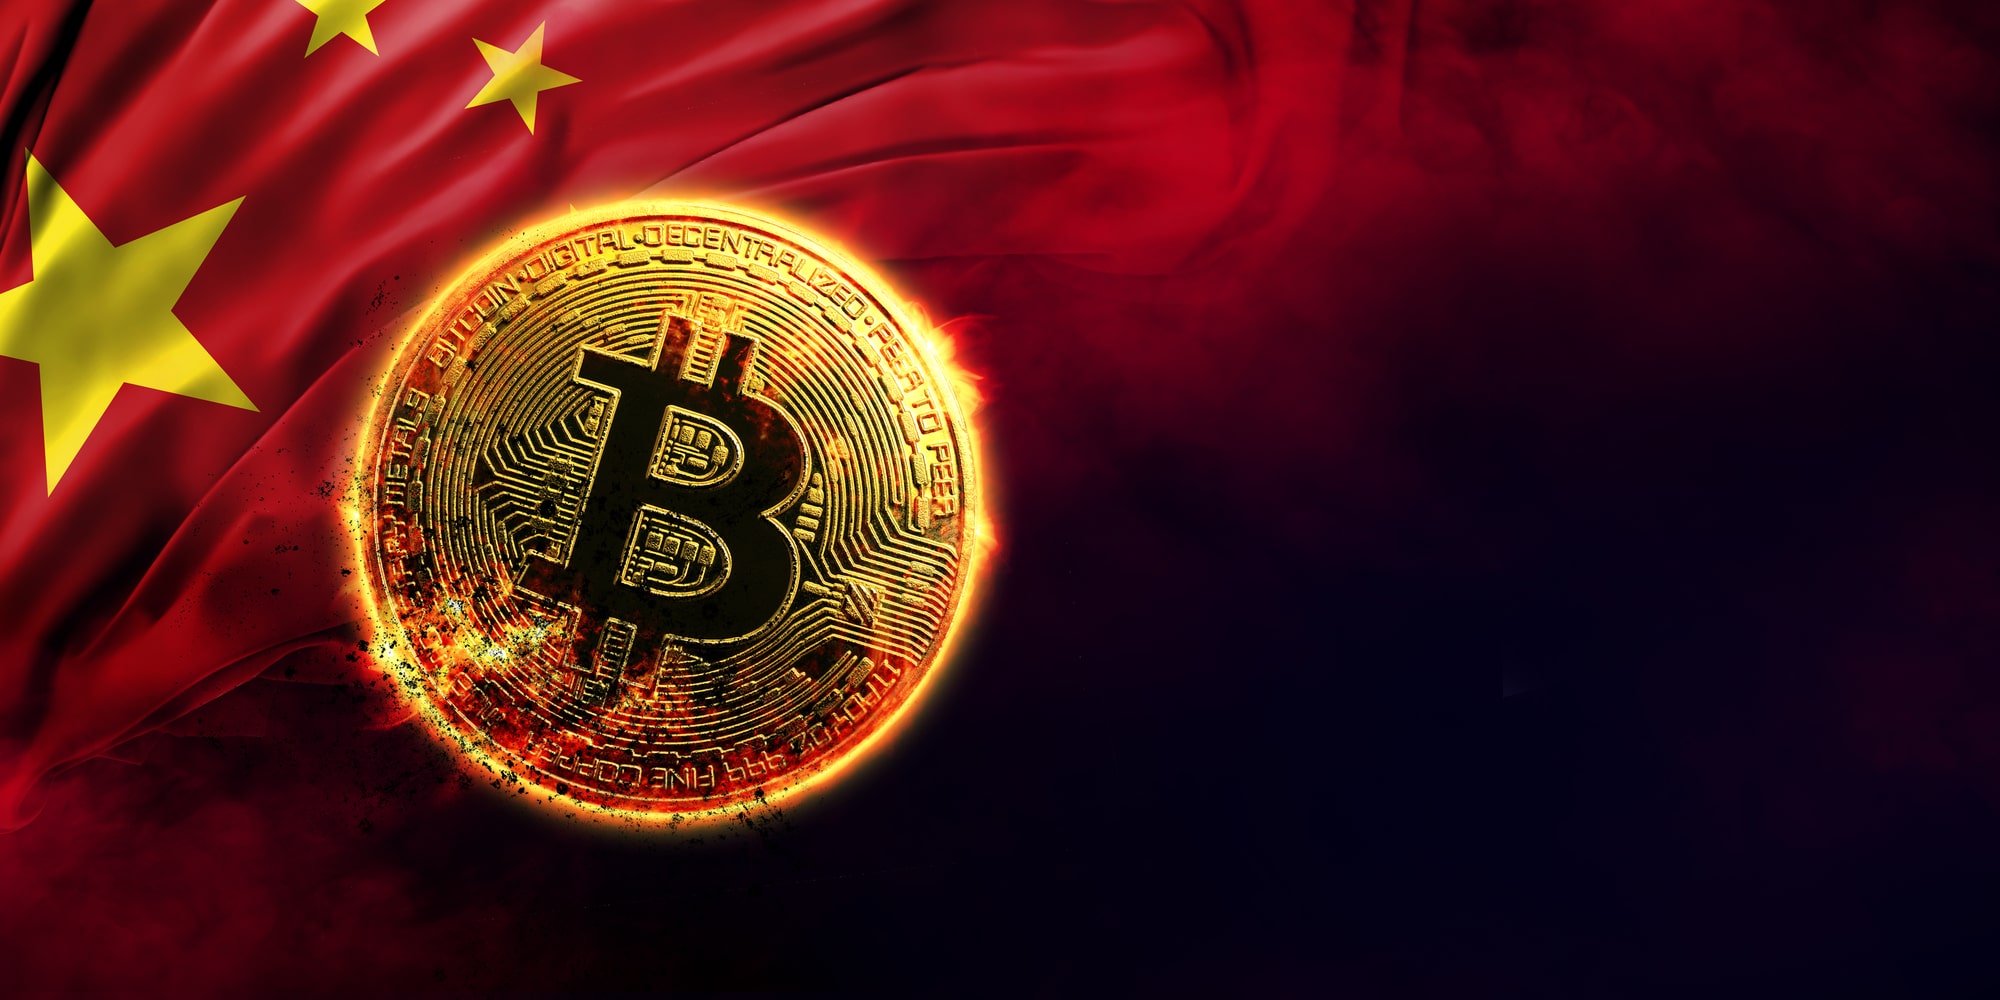 China bans all crypto-related activities, sending Bitcoin down